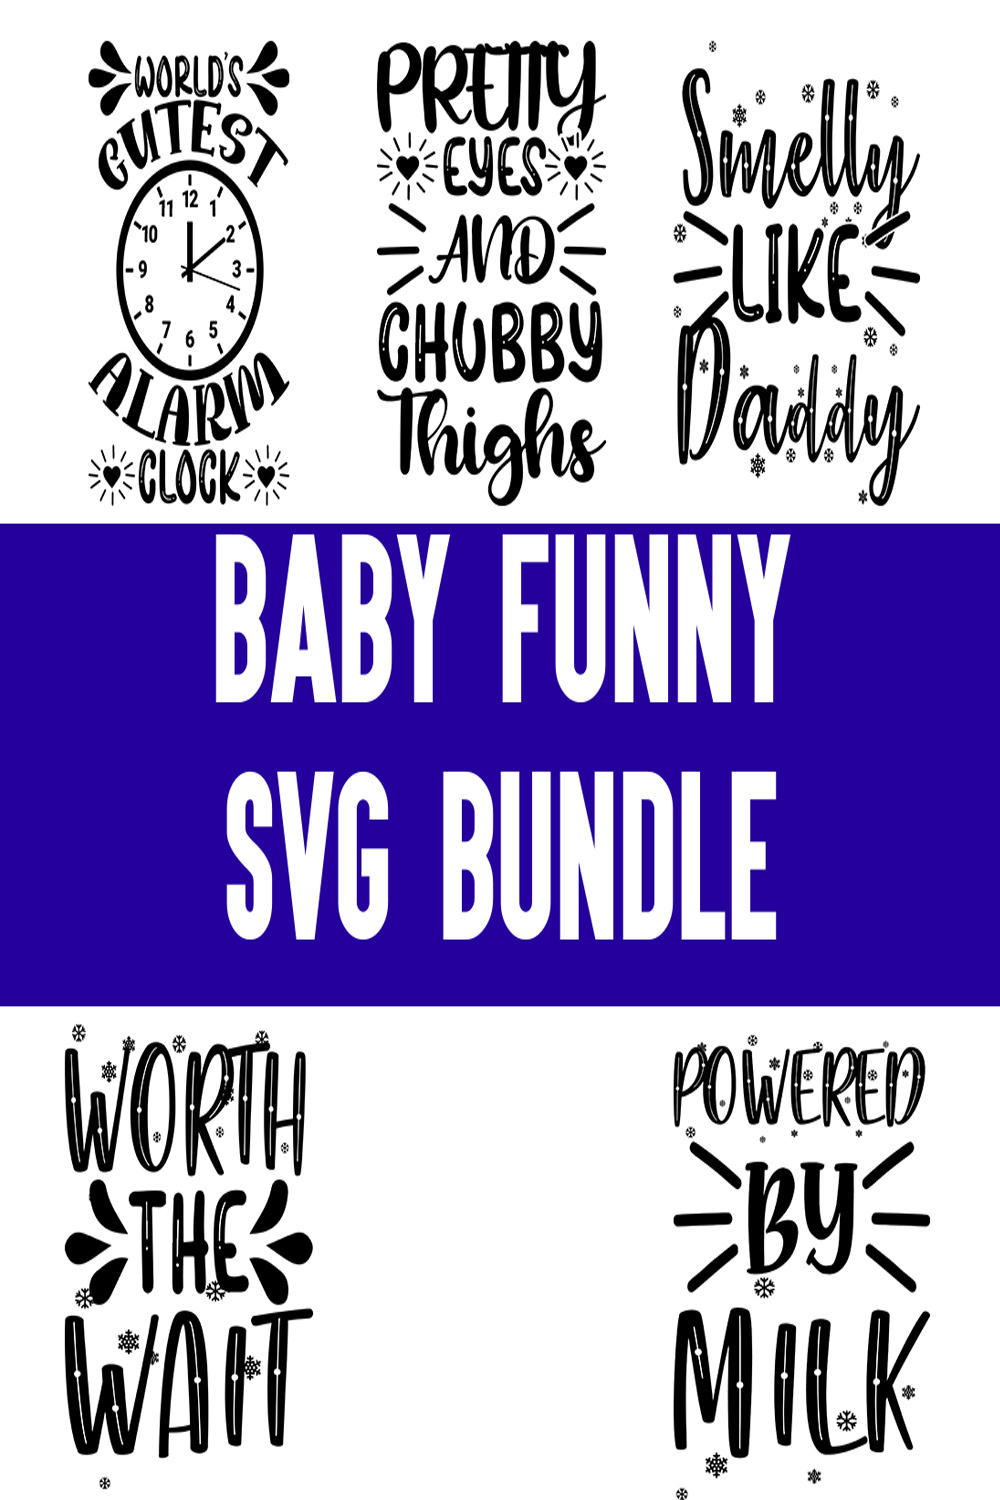 Baby Funny svg Bundle pinterest preview image.